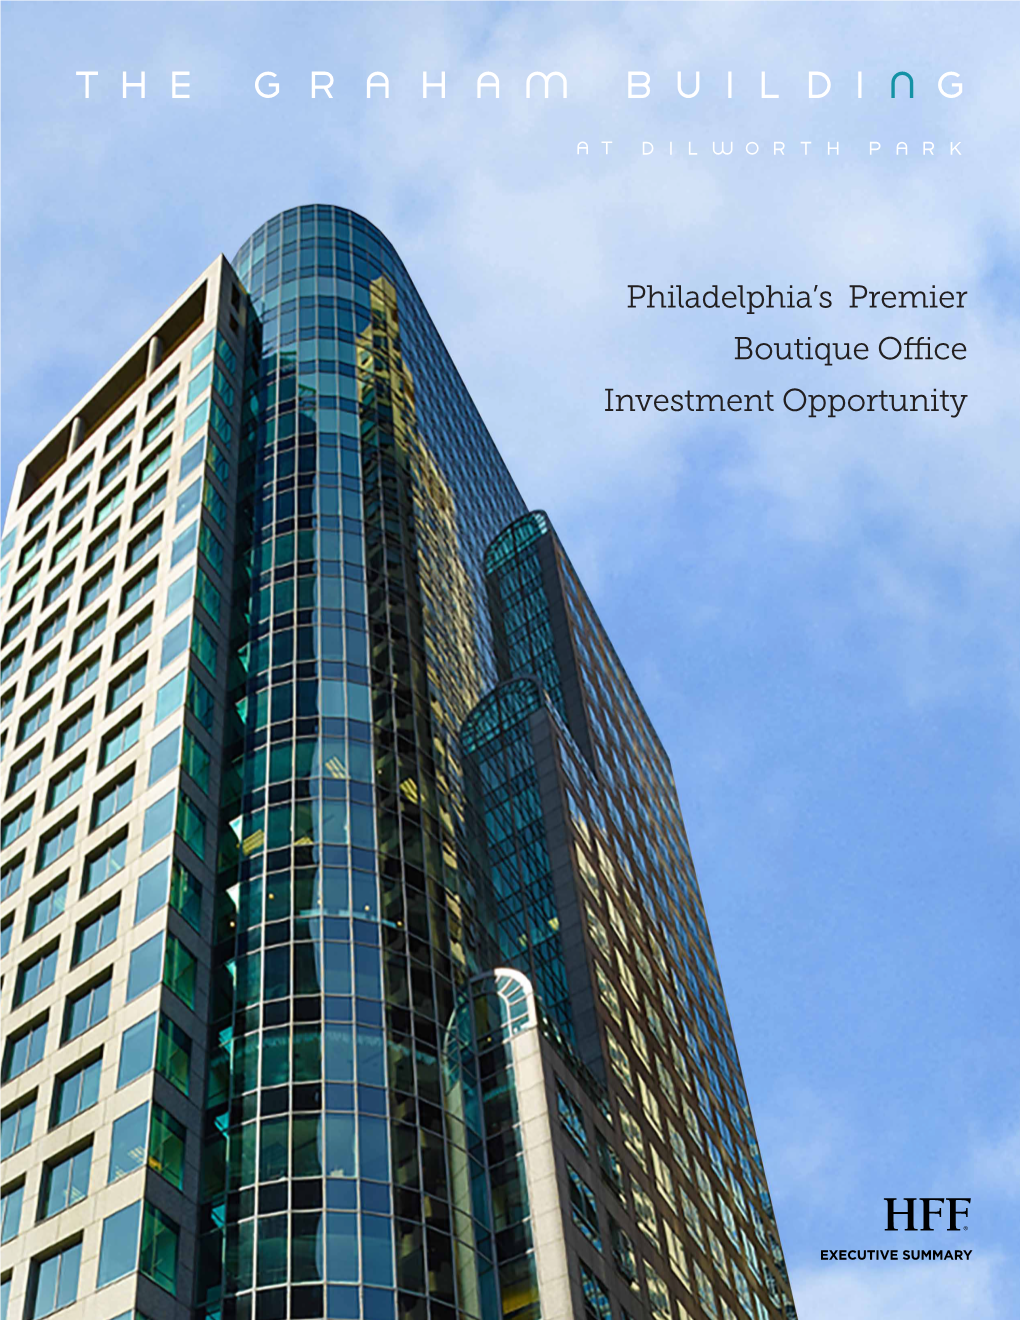 Philadelphia's Premier Boutique Office Investment Opportunity